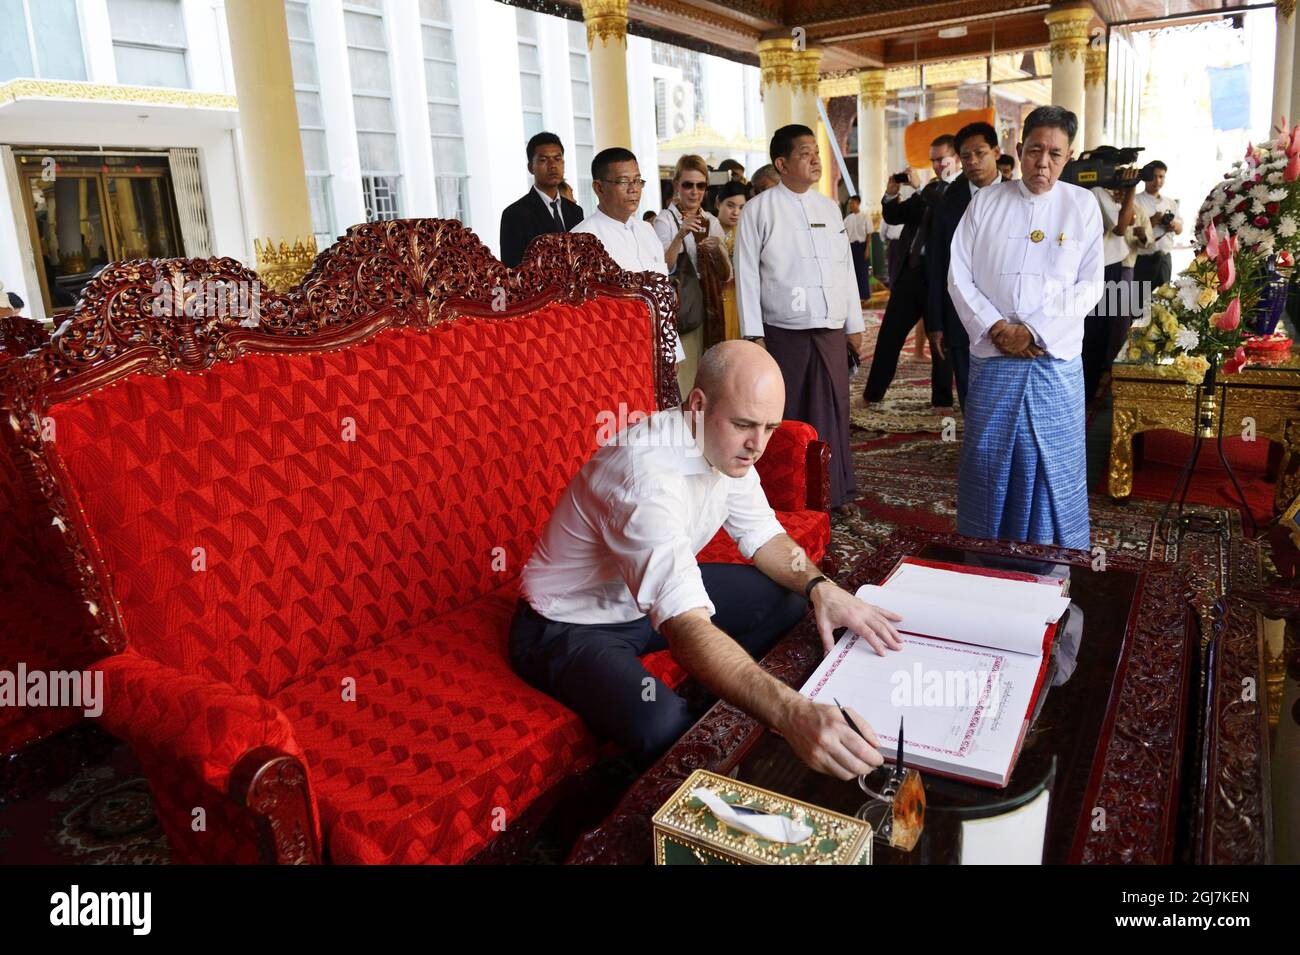 RANGOON 20121113 Sweden´s Prime Minister Fredrik Reinfeldt is seen during his visit to the Shwedagon Pagoda in Rangoon, Burma, November 13, 2012. The Swedish P.M is on an official visit to Burma. Foto: Henrik Montgomery / SCANPIX Kod: 10060 Stock Photo